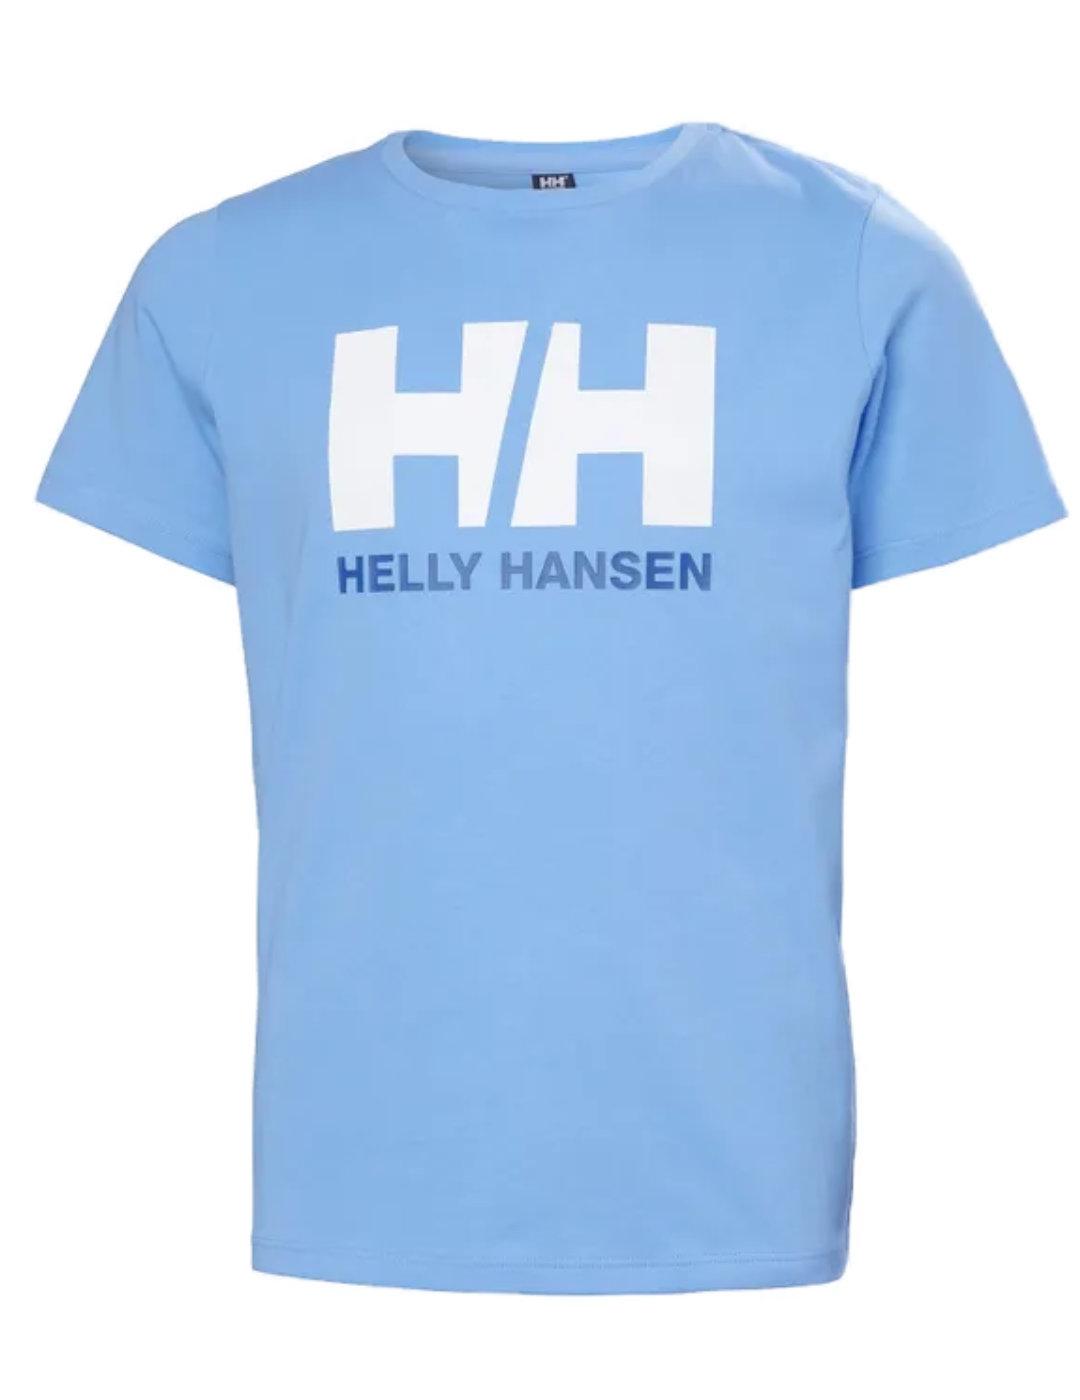 Helly Hansen UNISEX - Jersey con capucha - blue fog/azul claro 